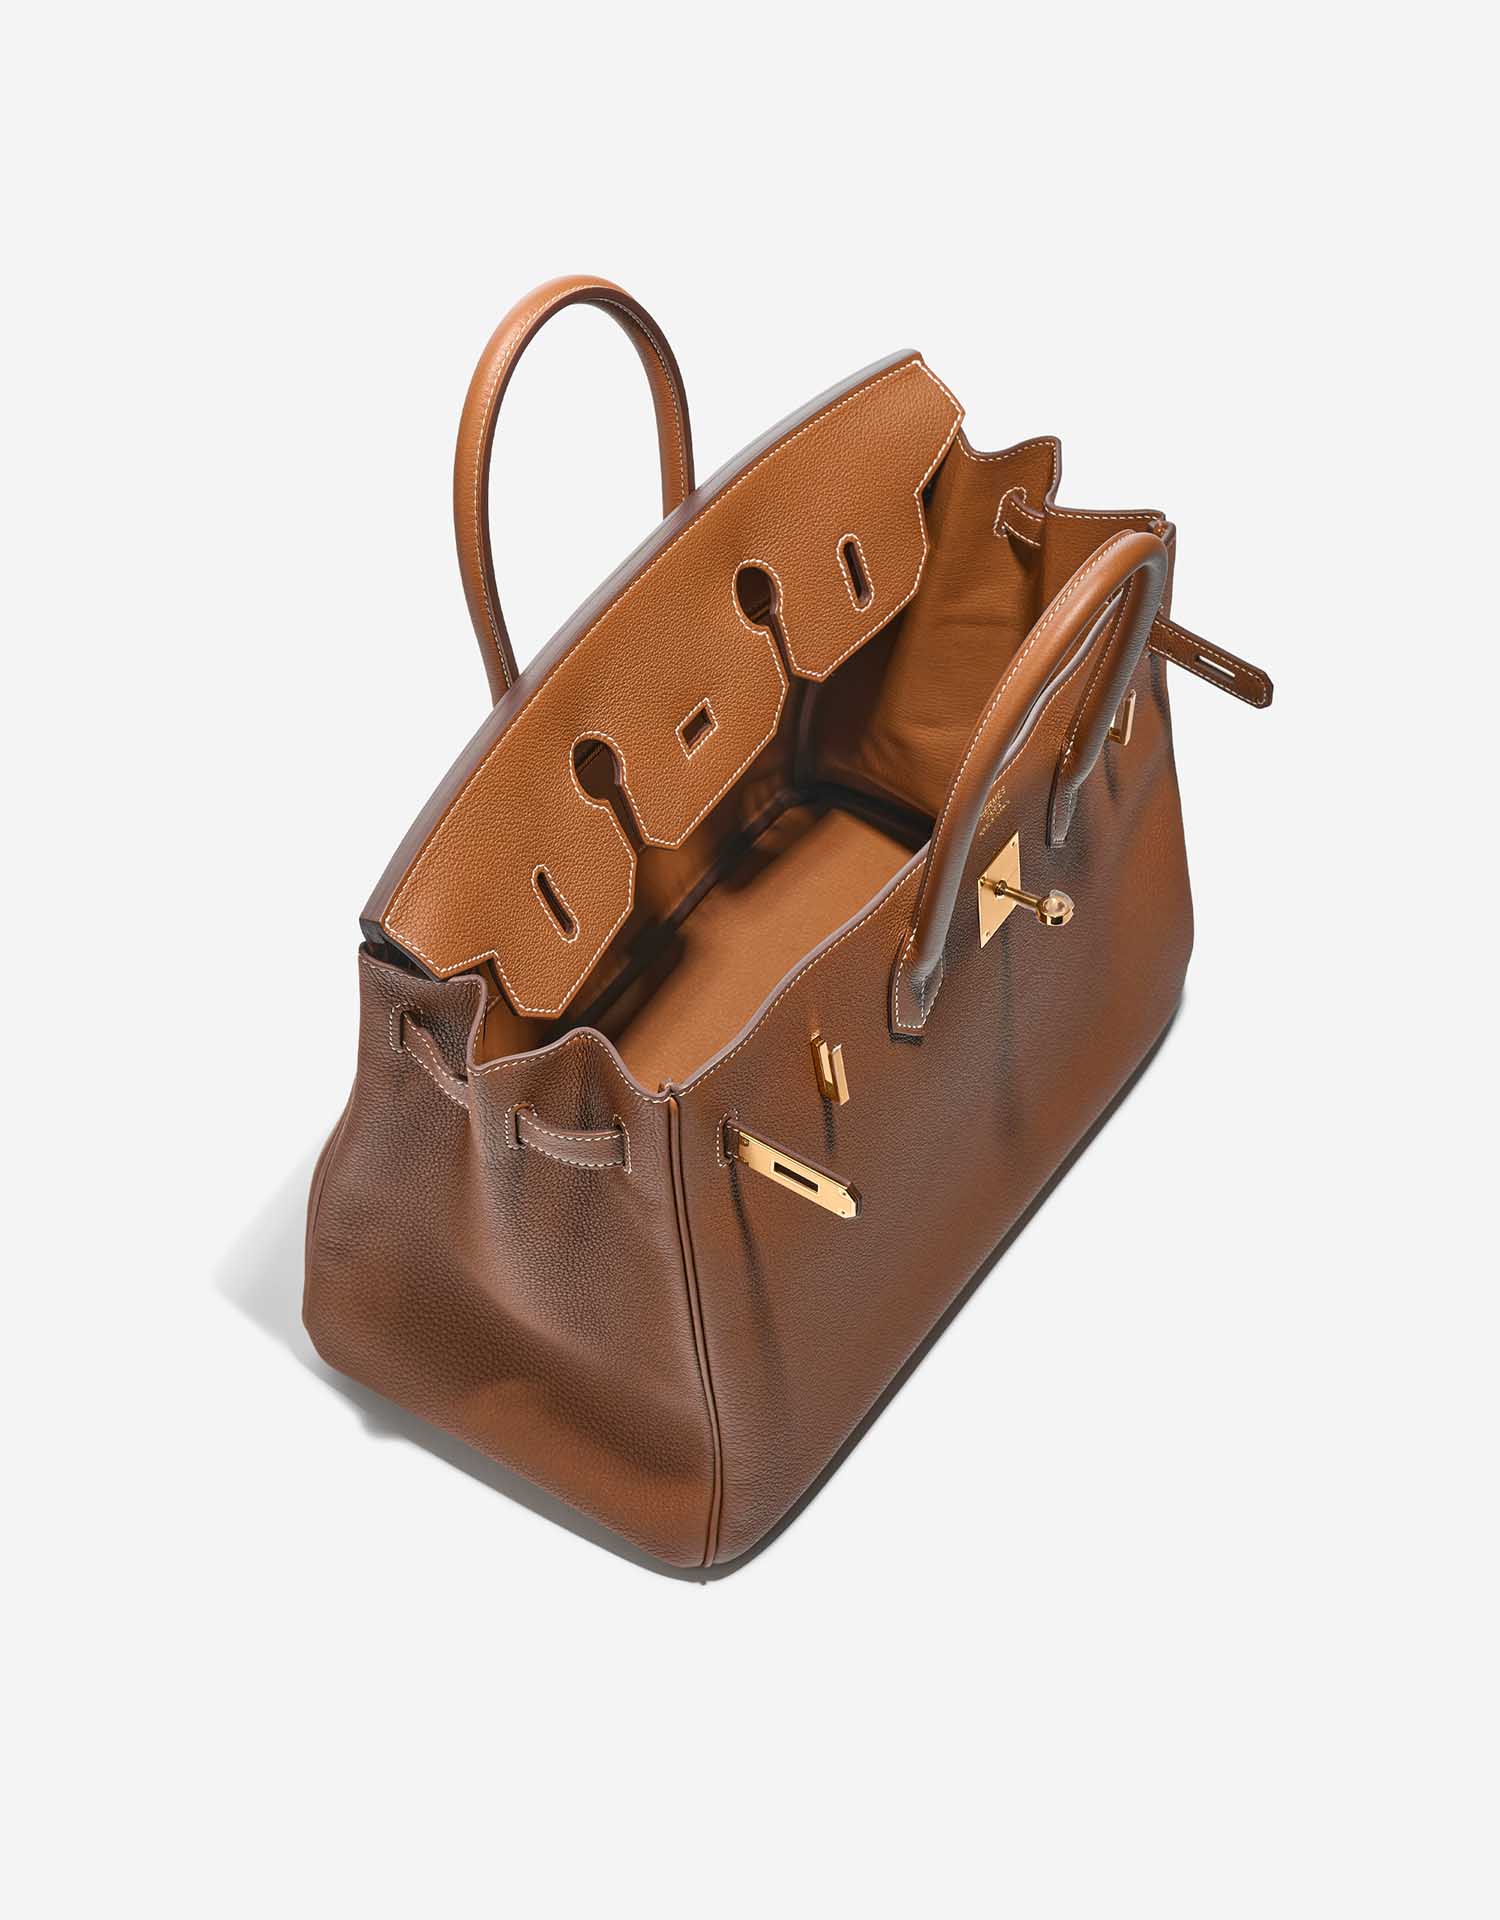 Hermès Birkin 35 cm Handbag in Brown Box Leather